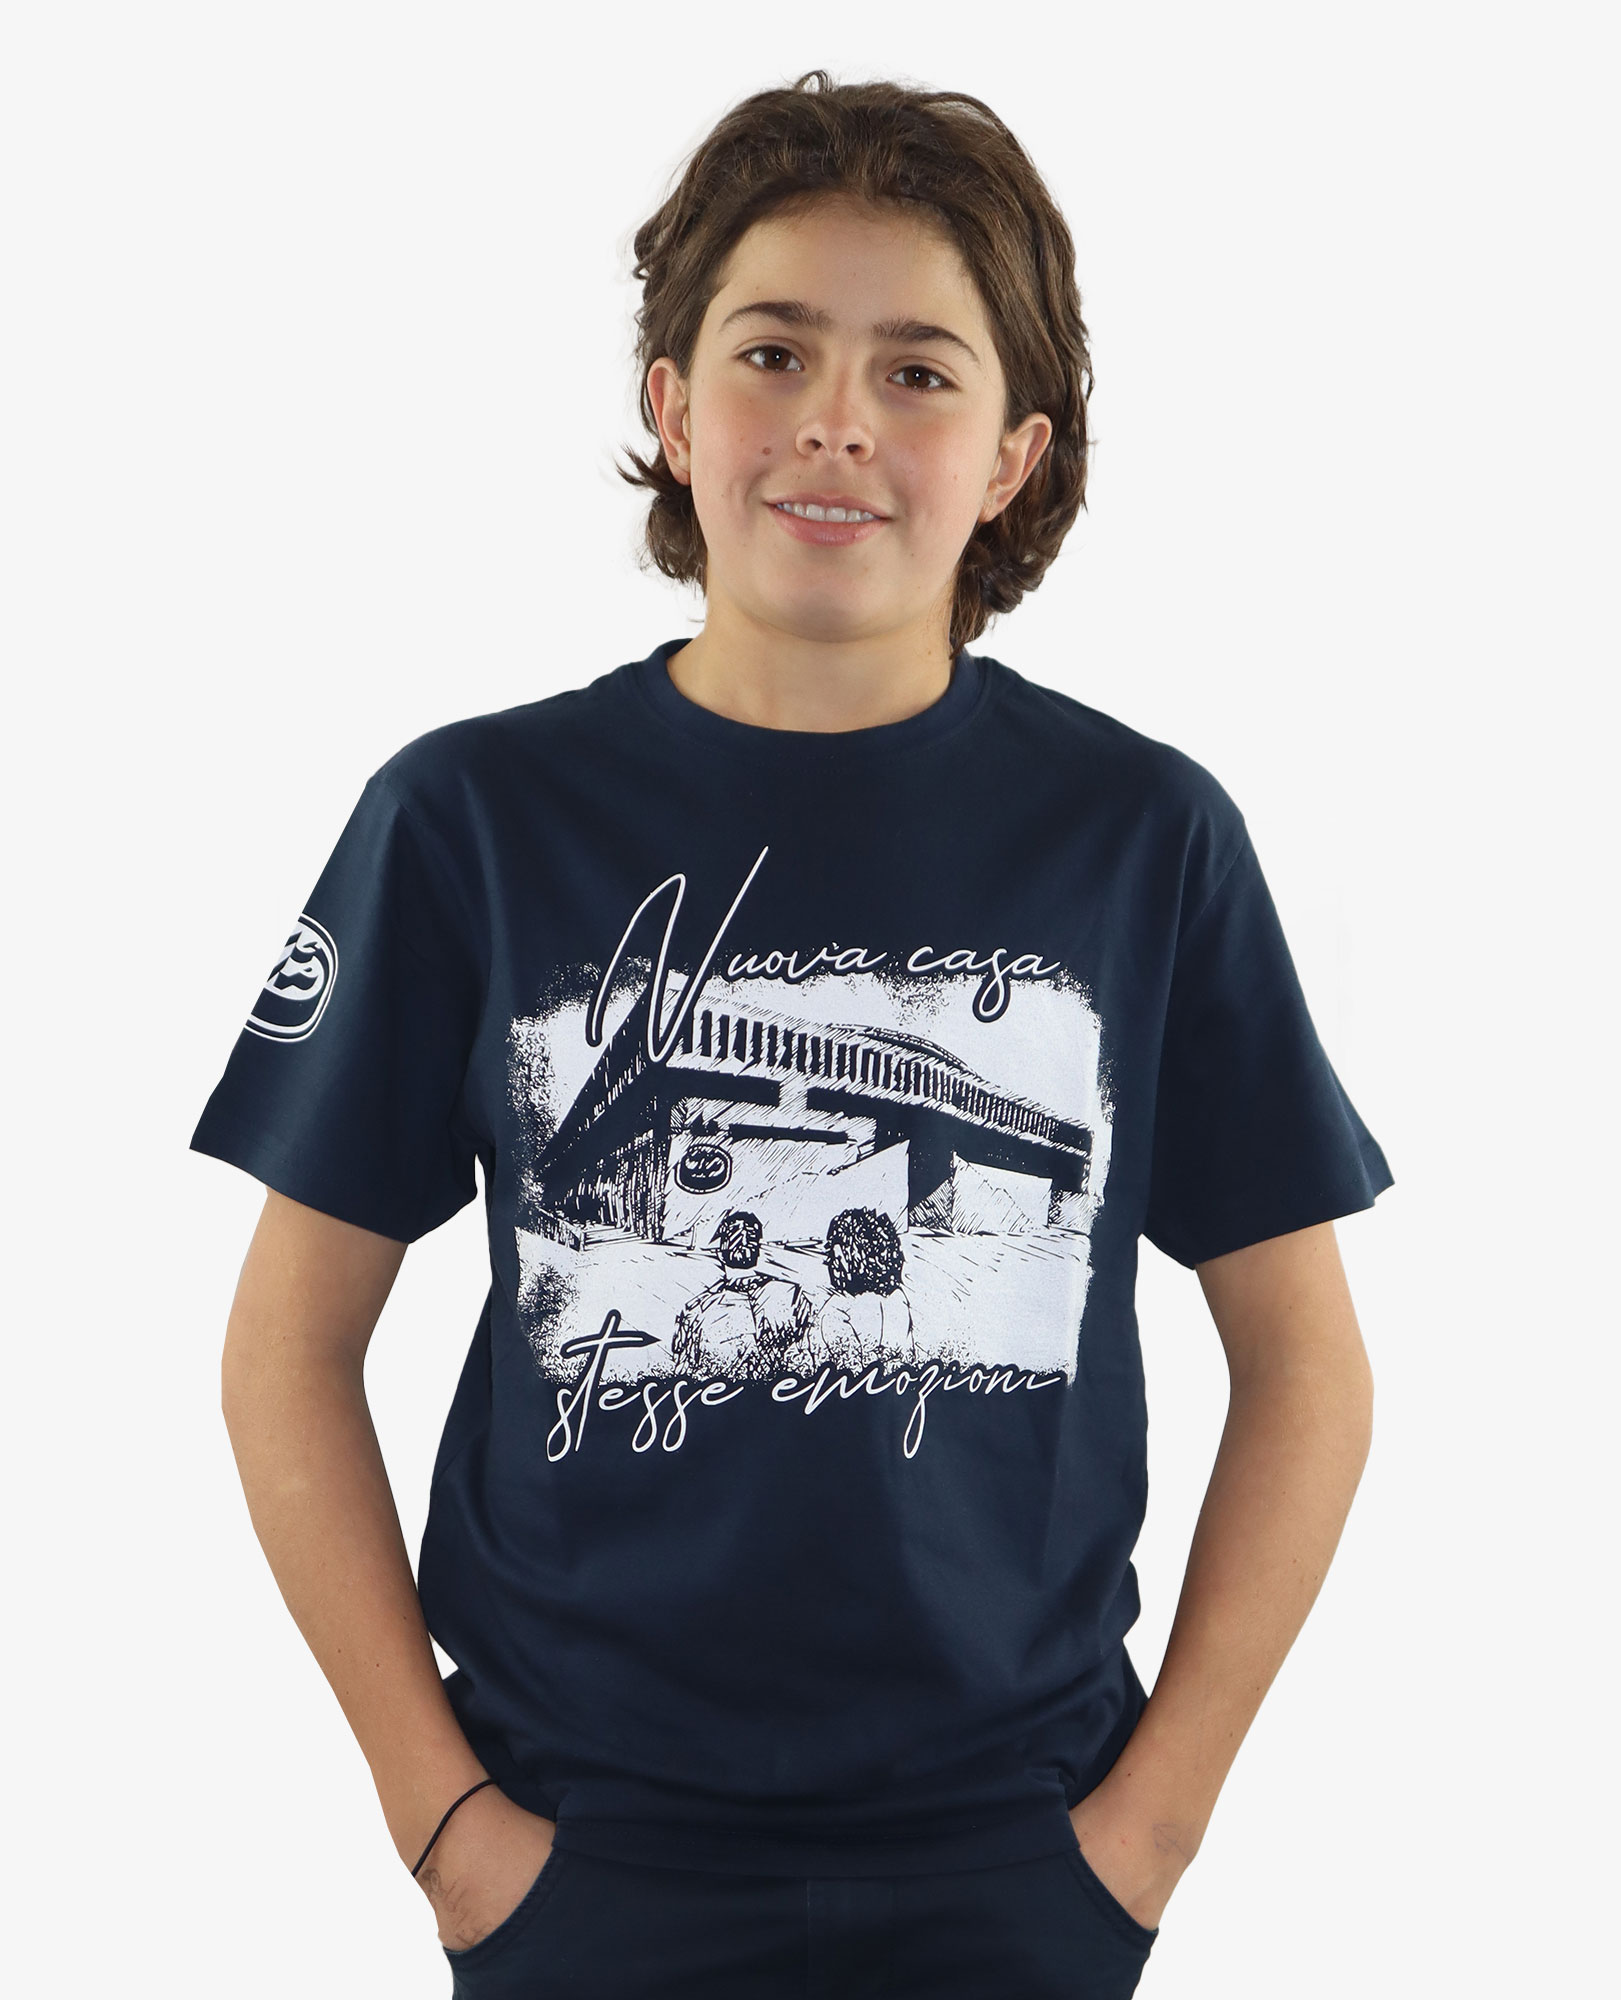 HCAP - T-shirt celebrativa da bambino - NUOVA CASA - STESSE EMOZIONI 